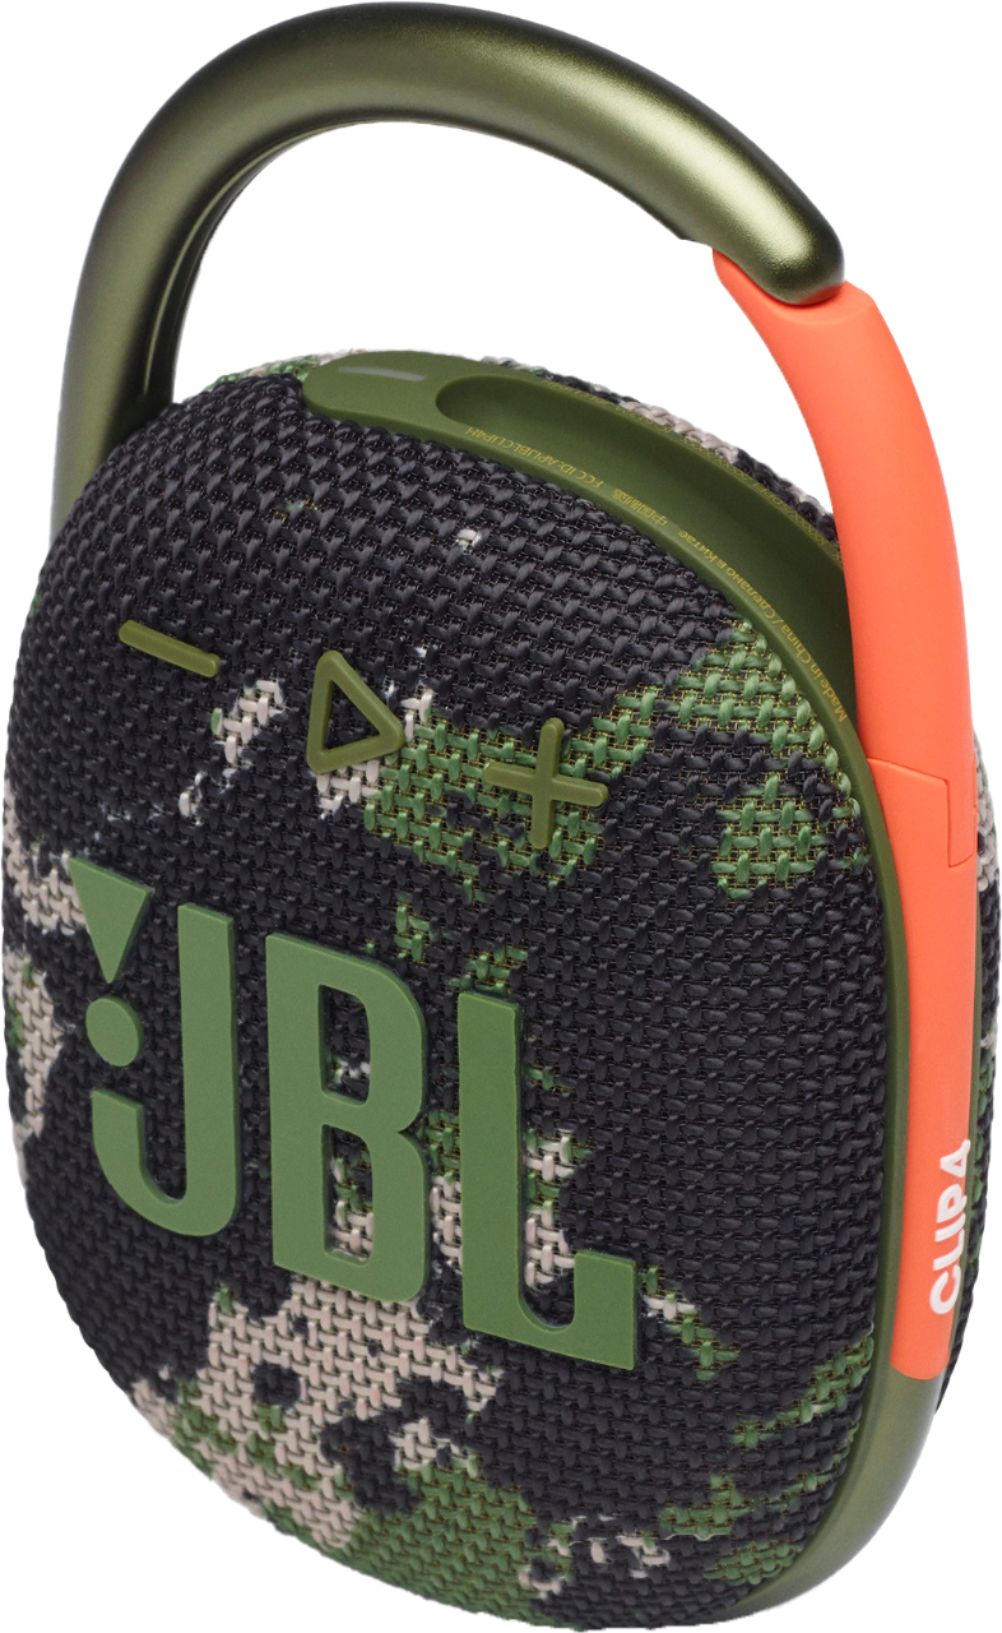 JBL - CLIP4 Portable Bluetooth Speaker - Camoflage_2